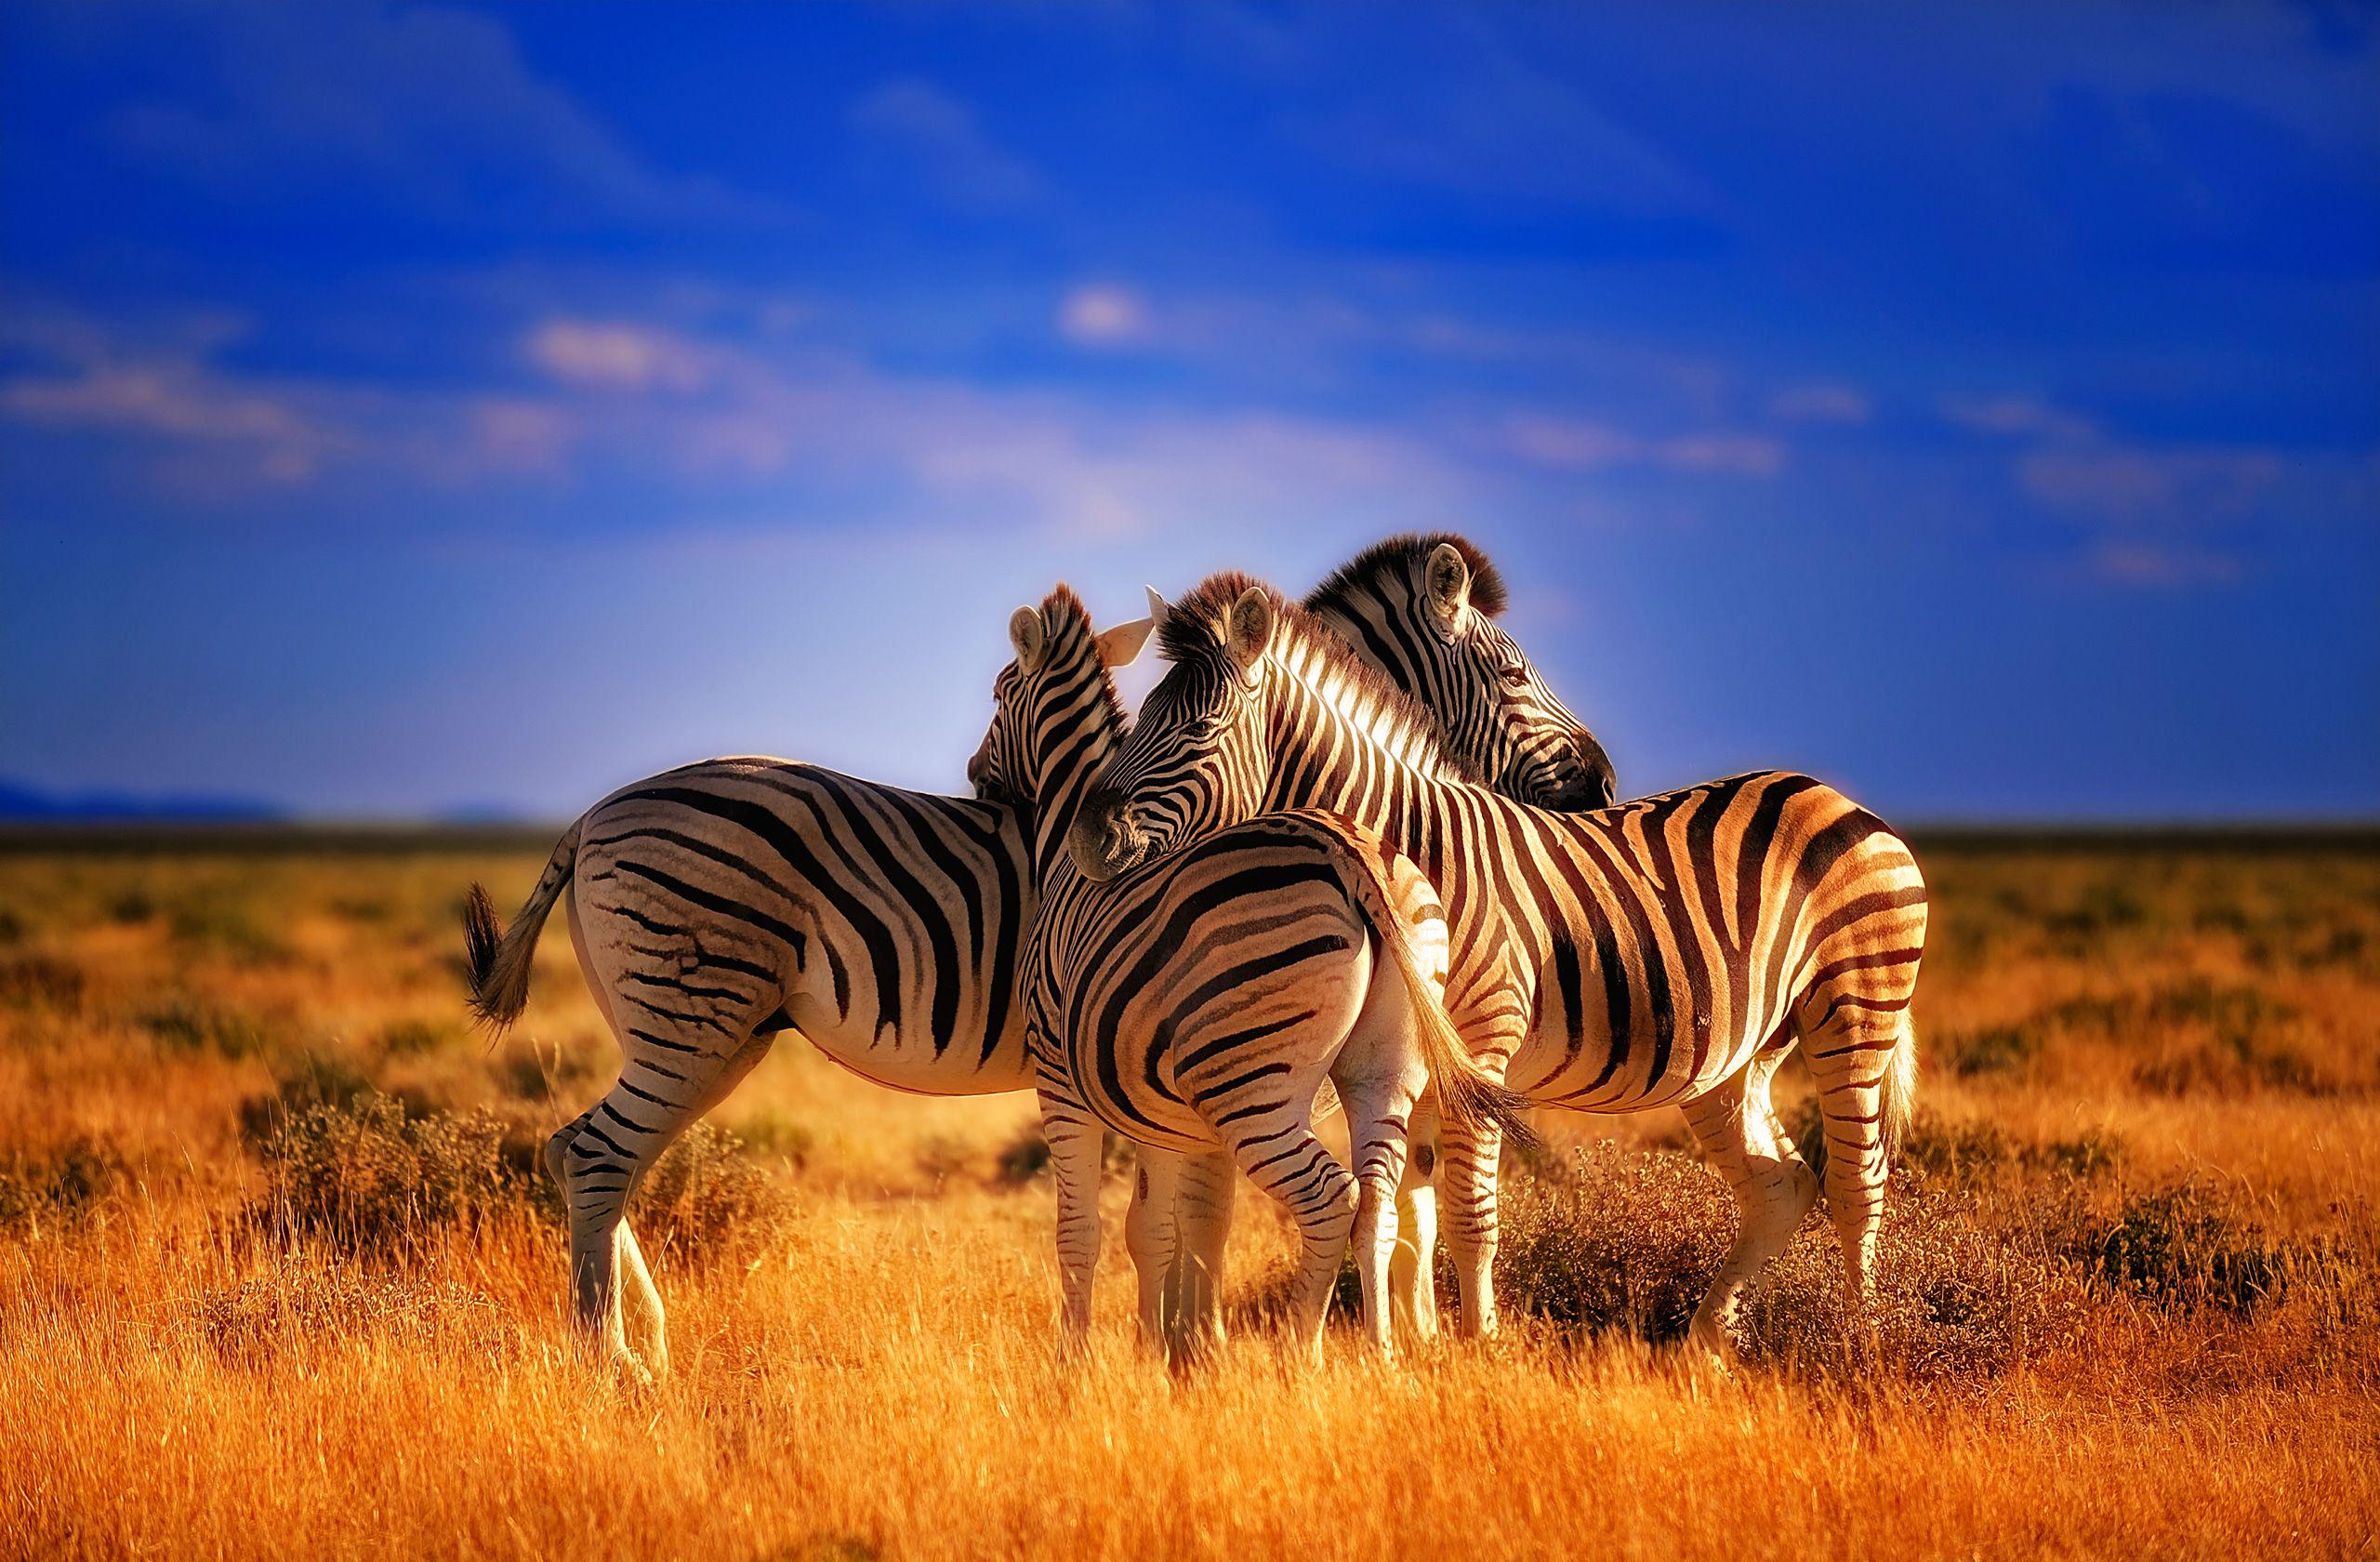 Zebra (Animal) HD Wallpaper Image